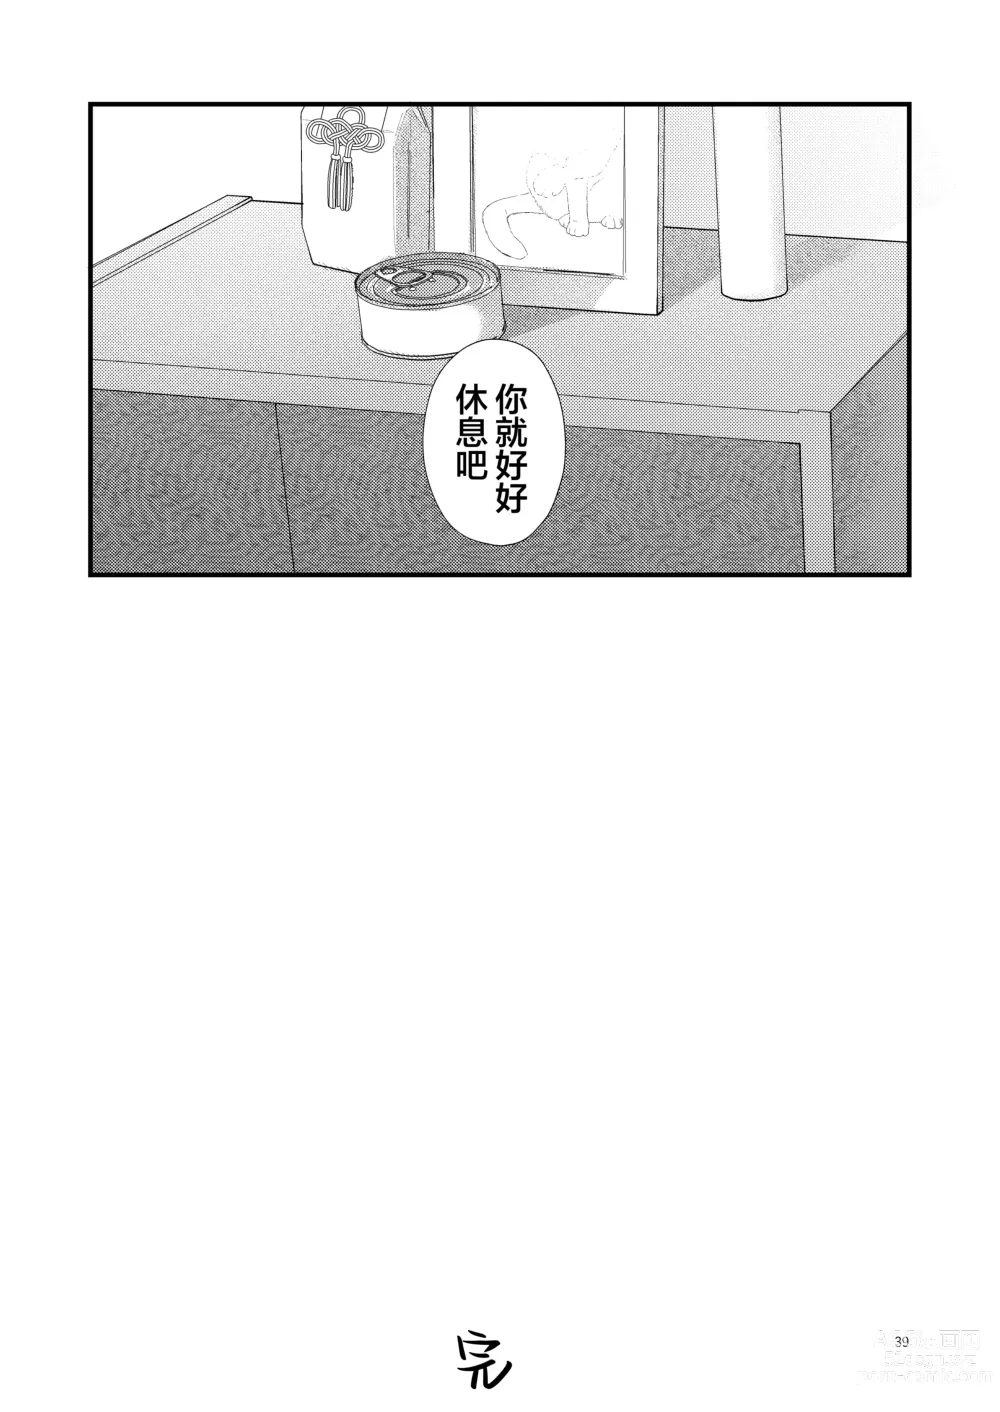 Page 39 of doujinshi 捡回家的猫竟是猫妖